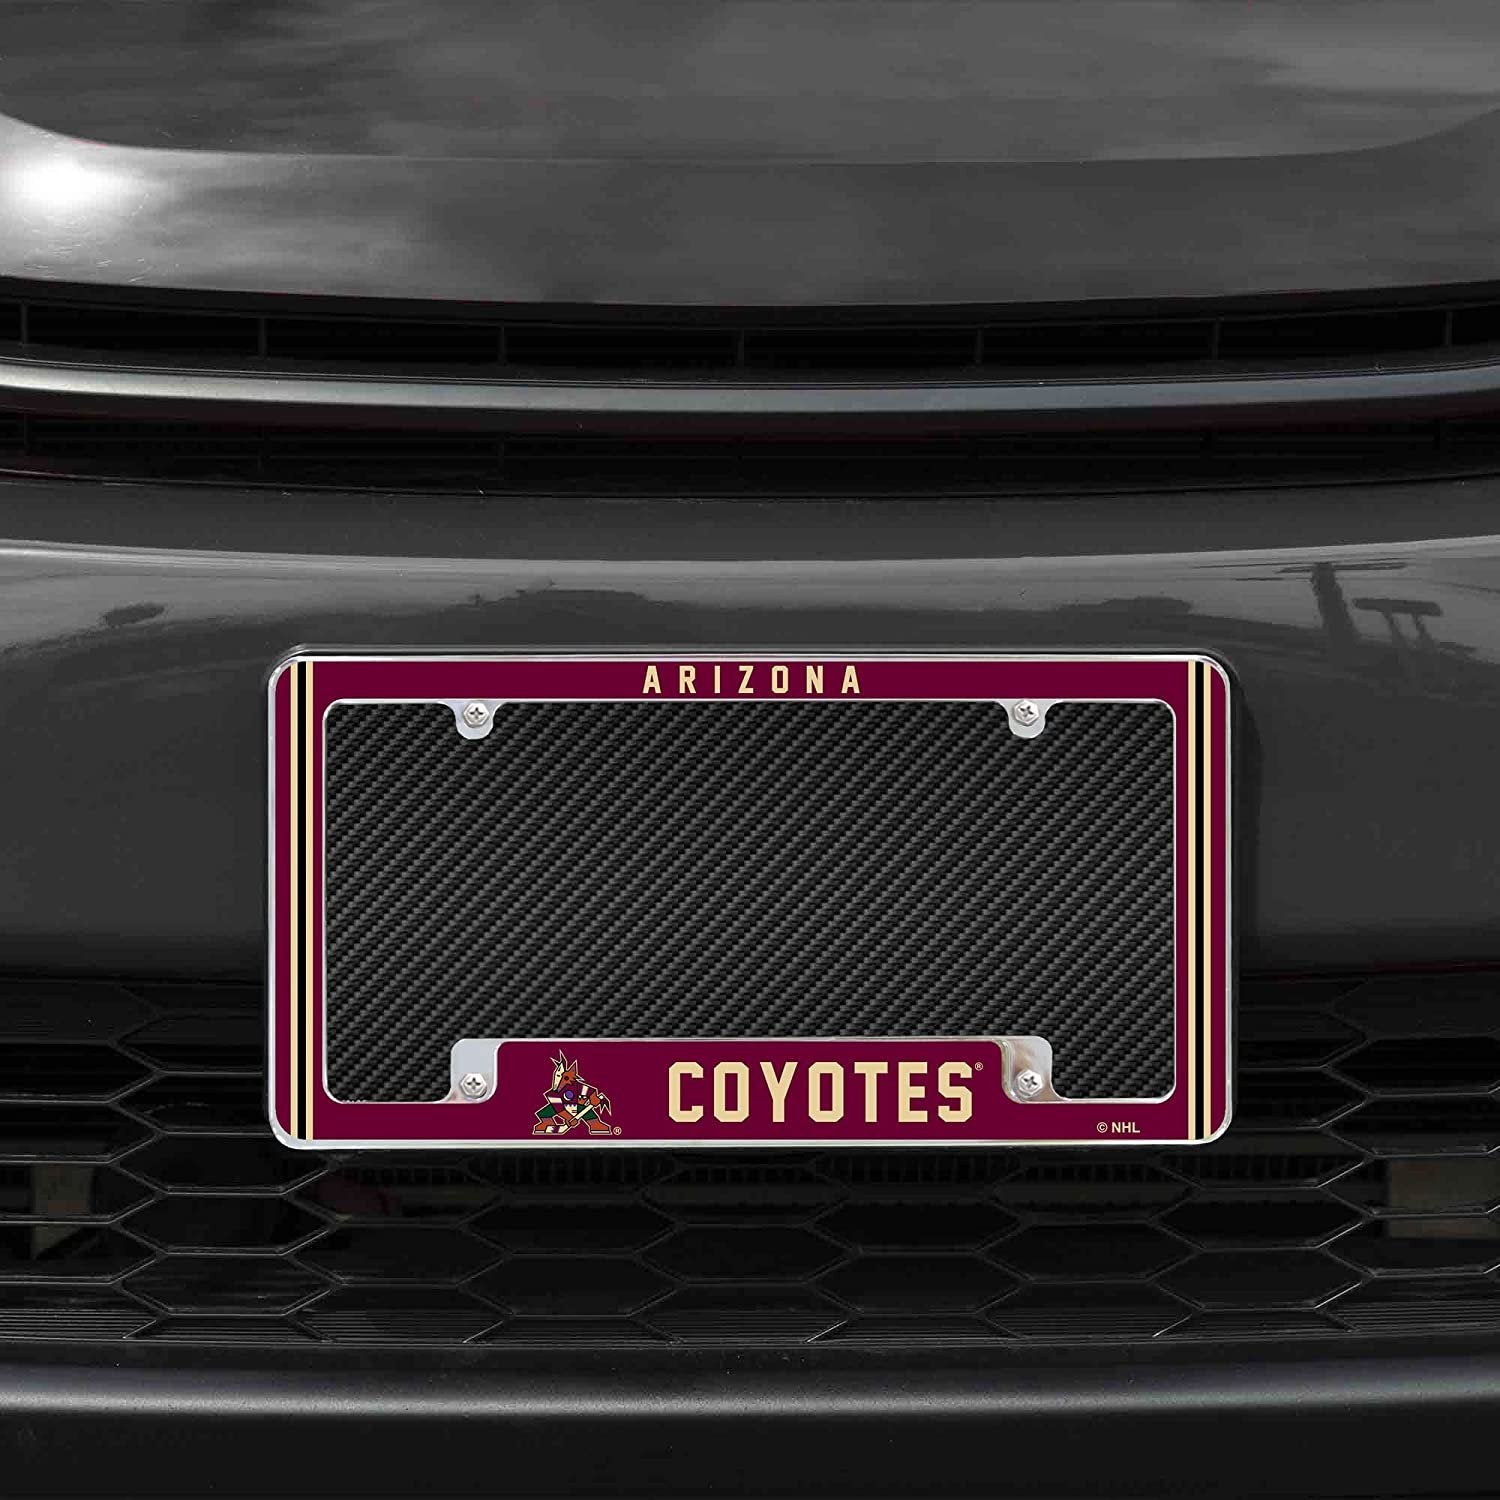 Arizona Coyotes Metal License Plate Frame Chrome Tag Cover Alternate Design 6x12 Inch